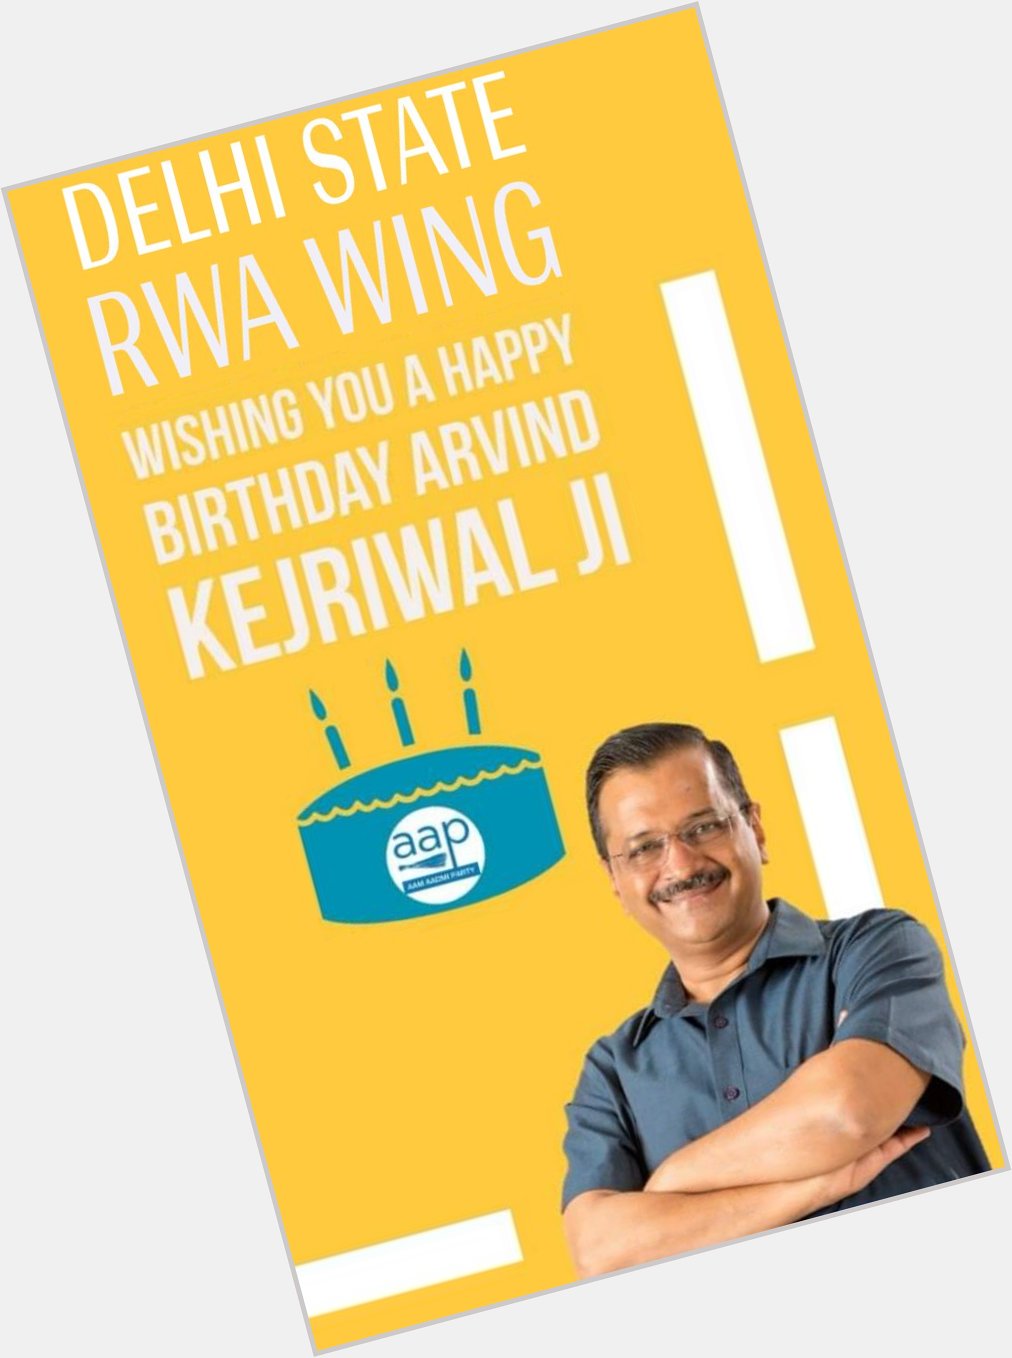 Delhi State RWA wing Wishing you A Happy birthday Arvind kejriwal ji   